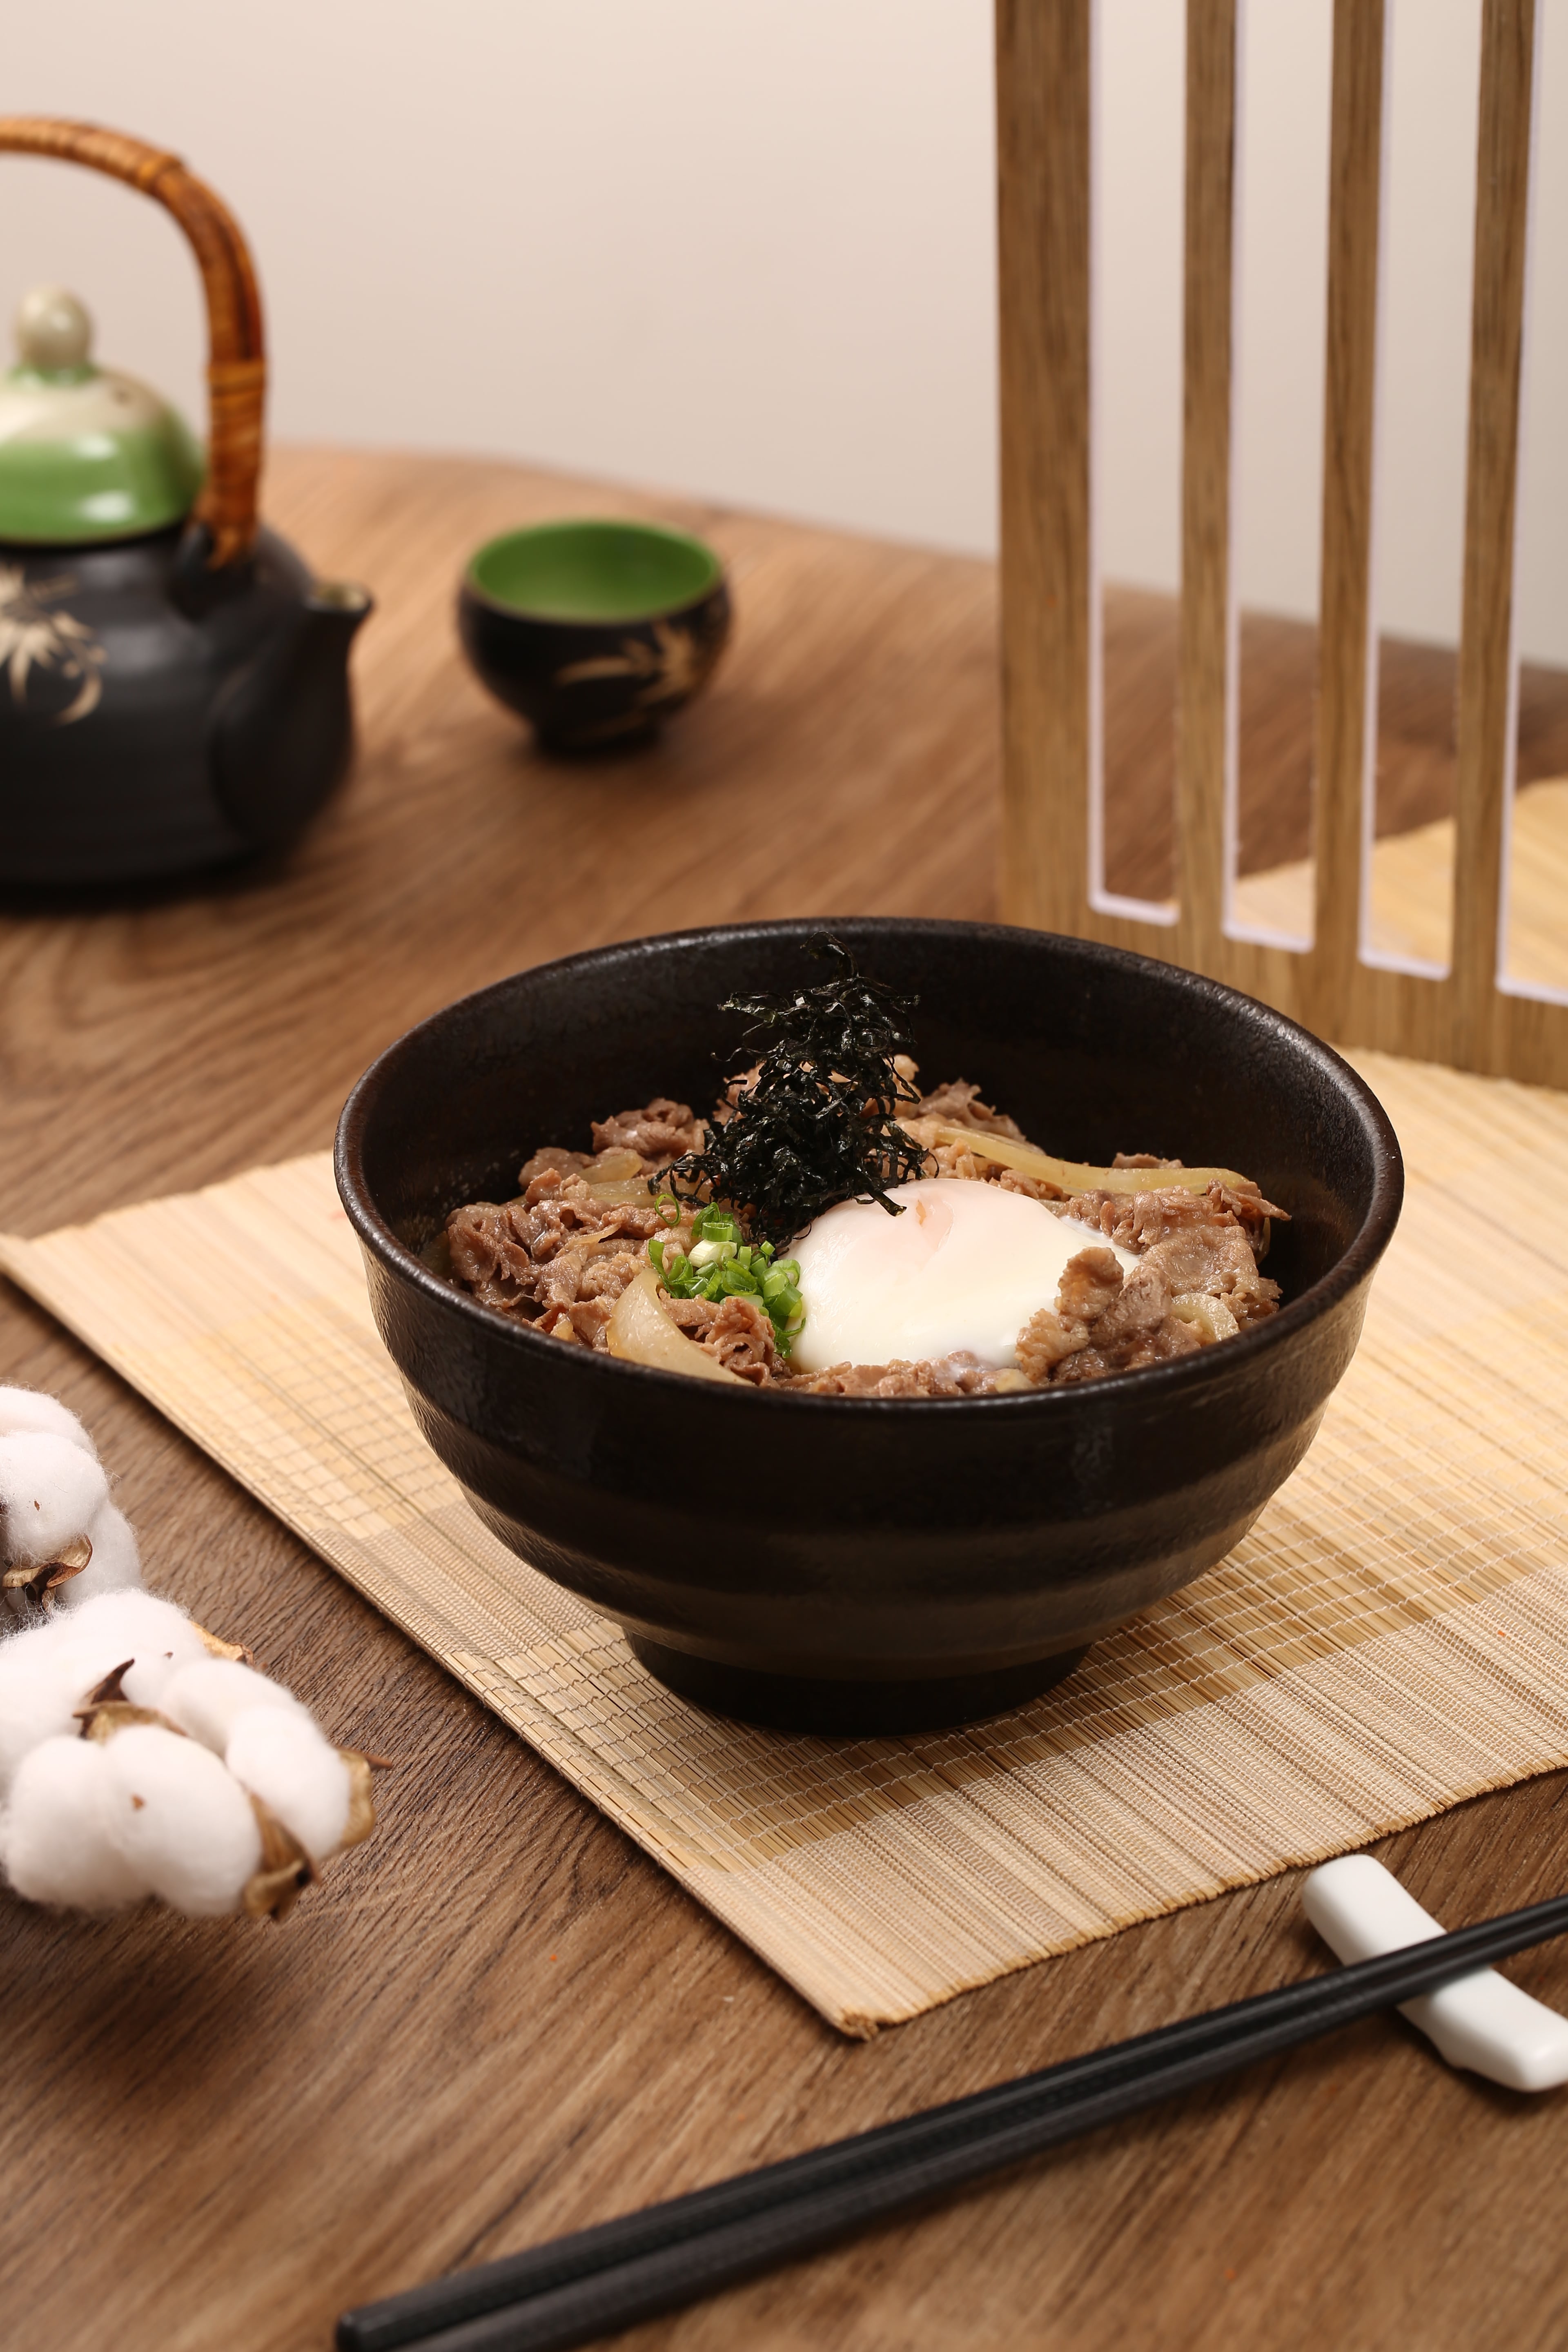 The quintessence of Japanese cuisine